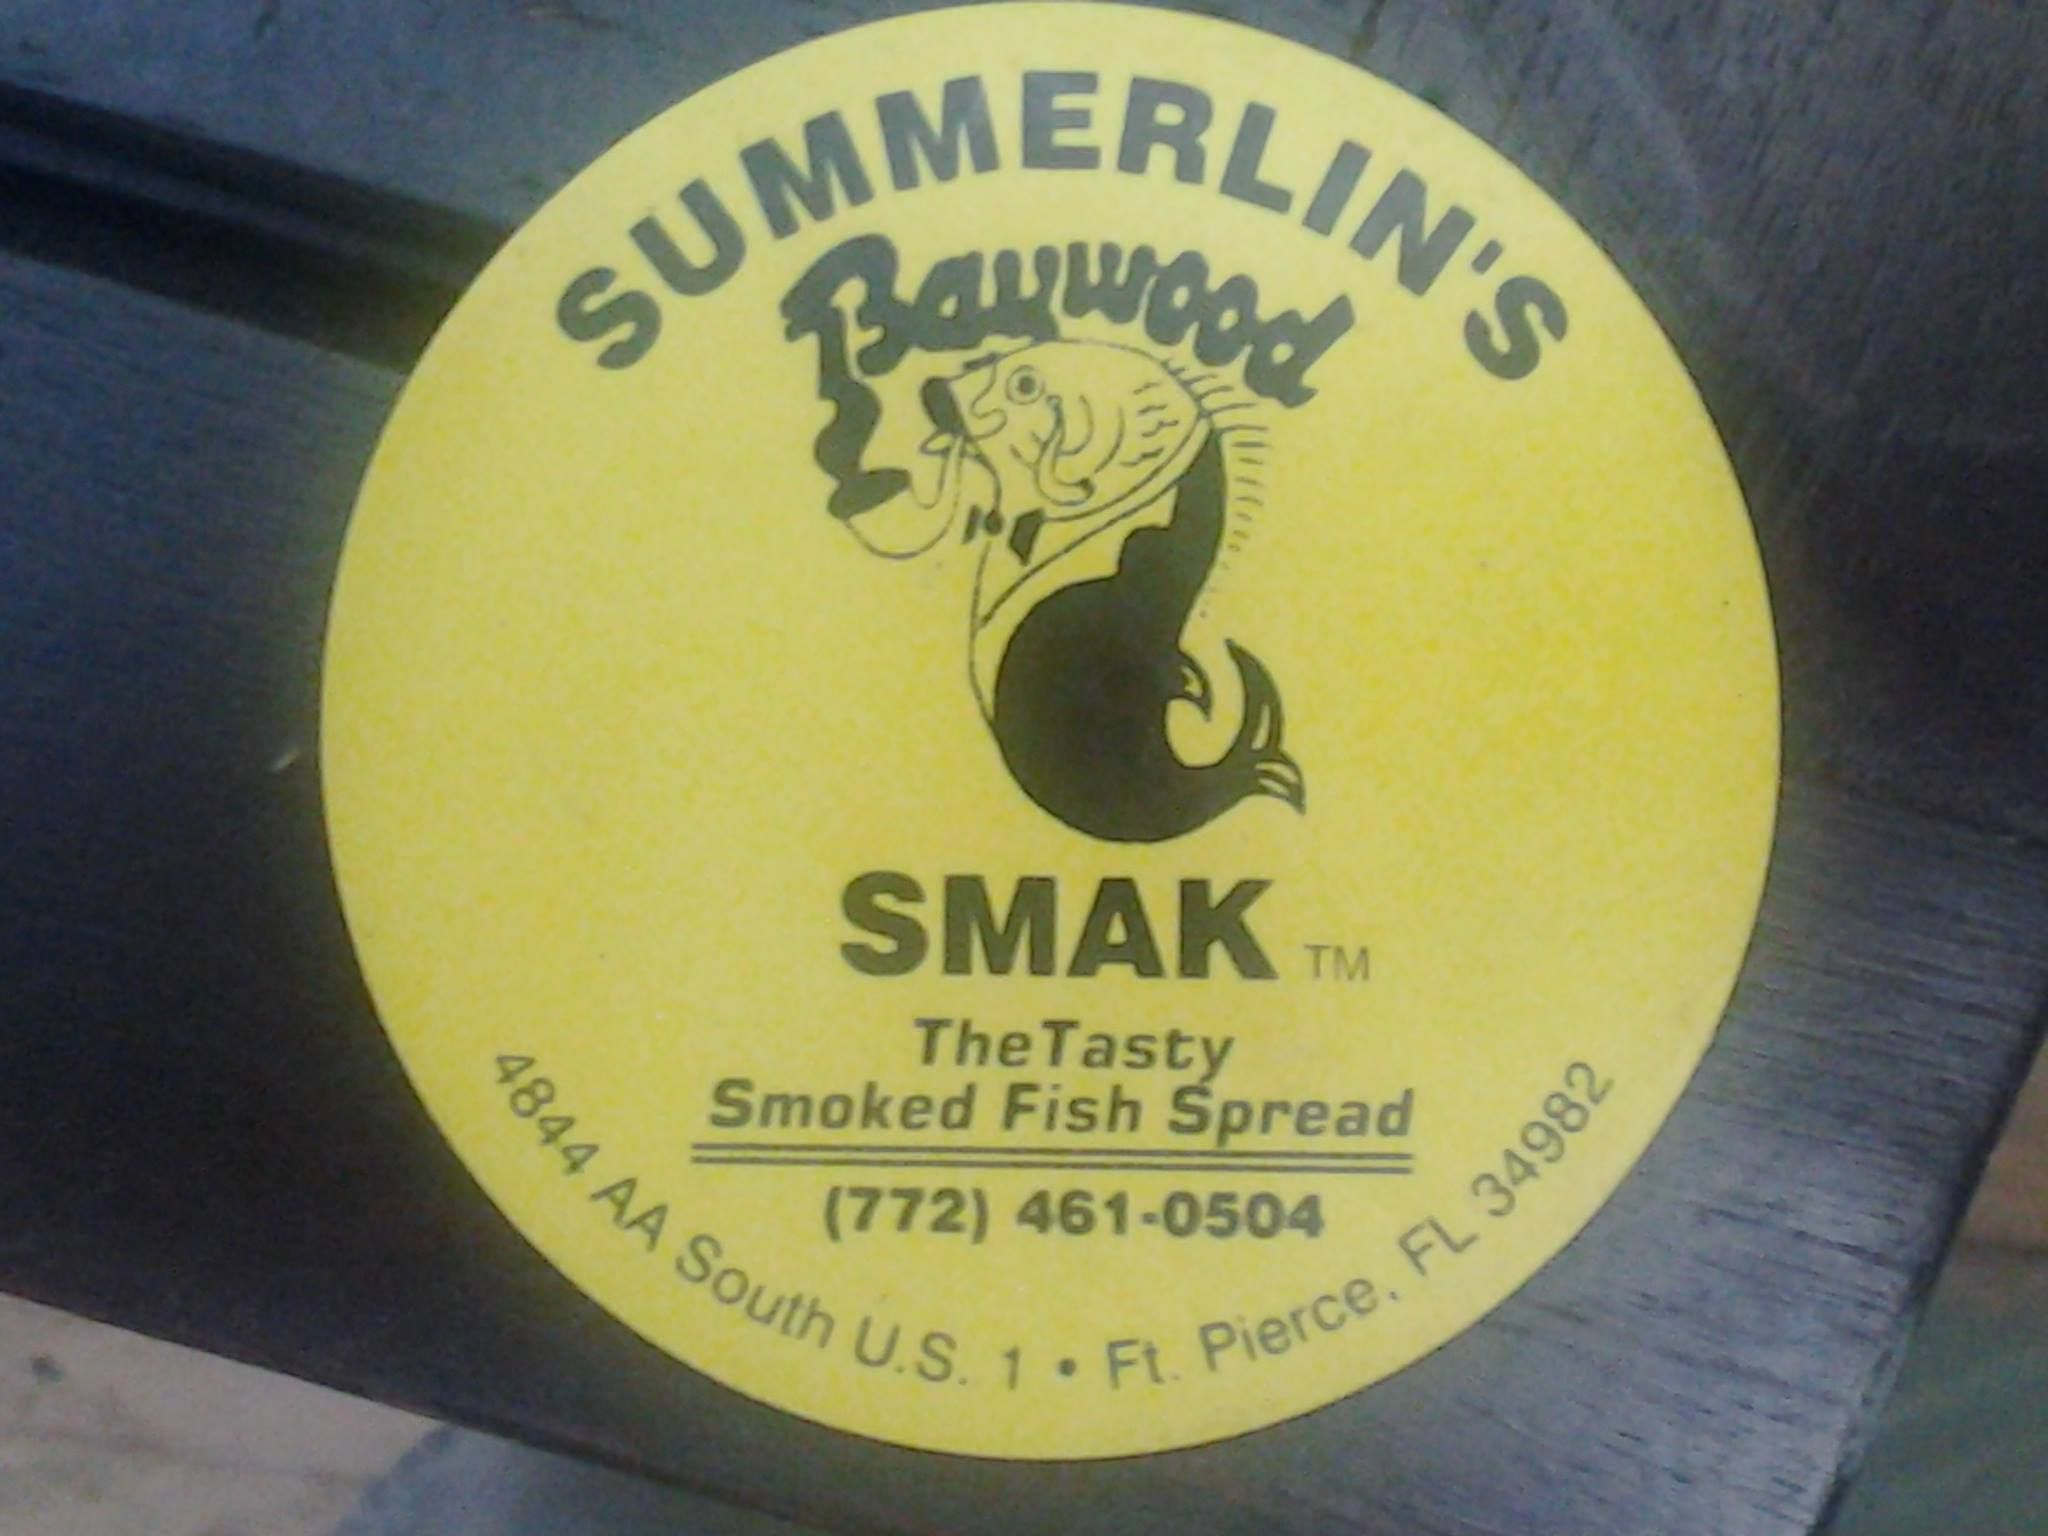 Summerlin's Baywood Smoked